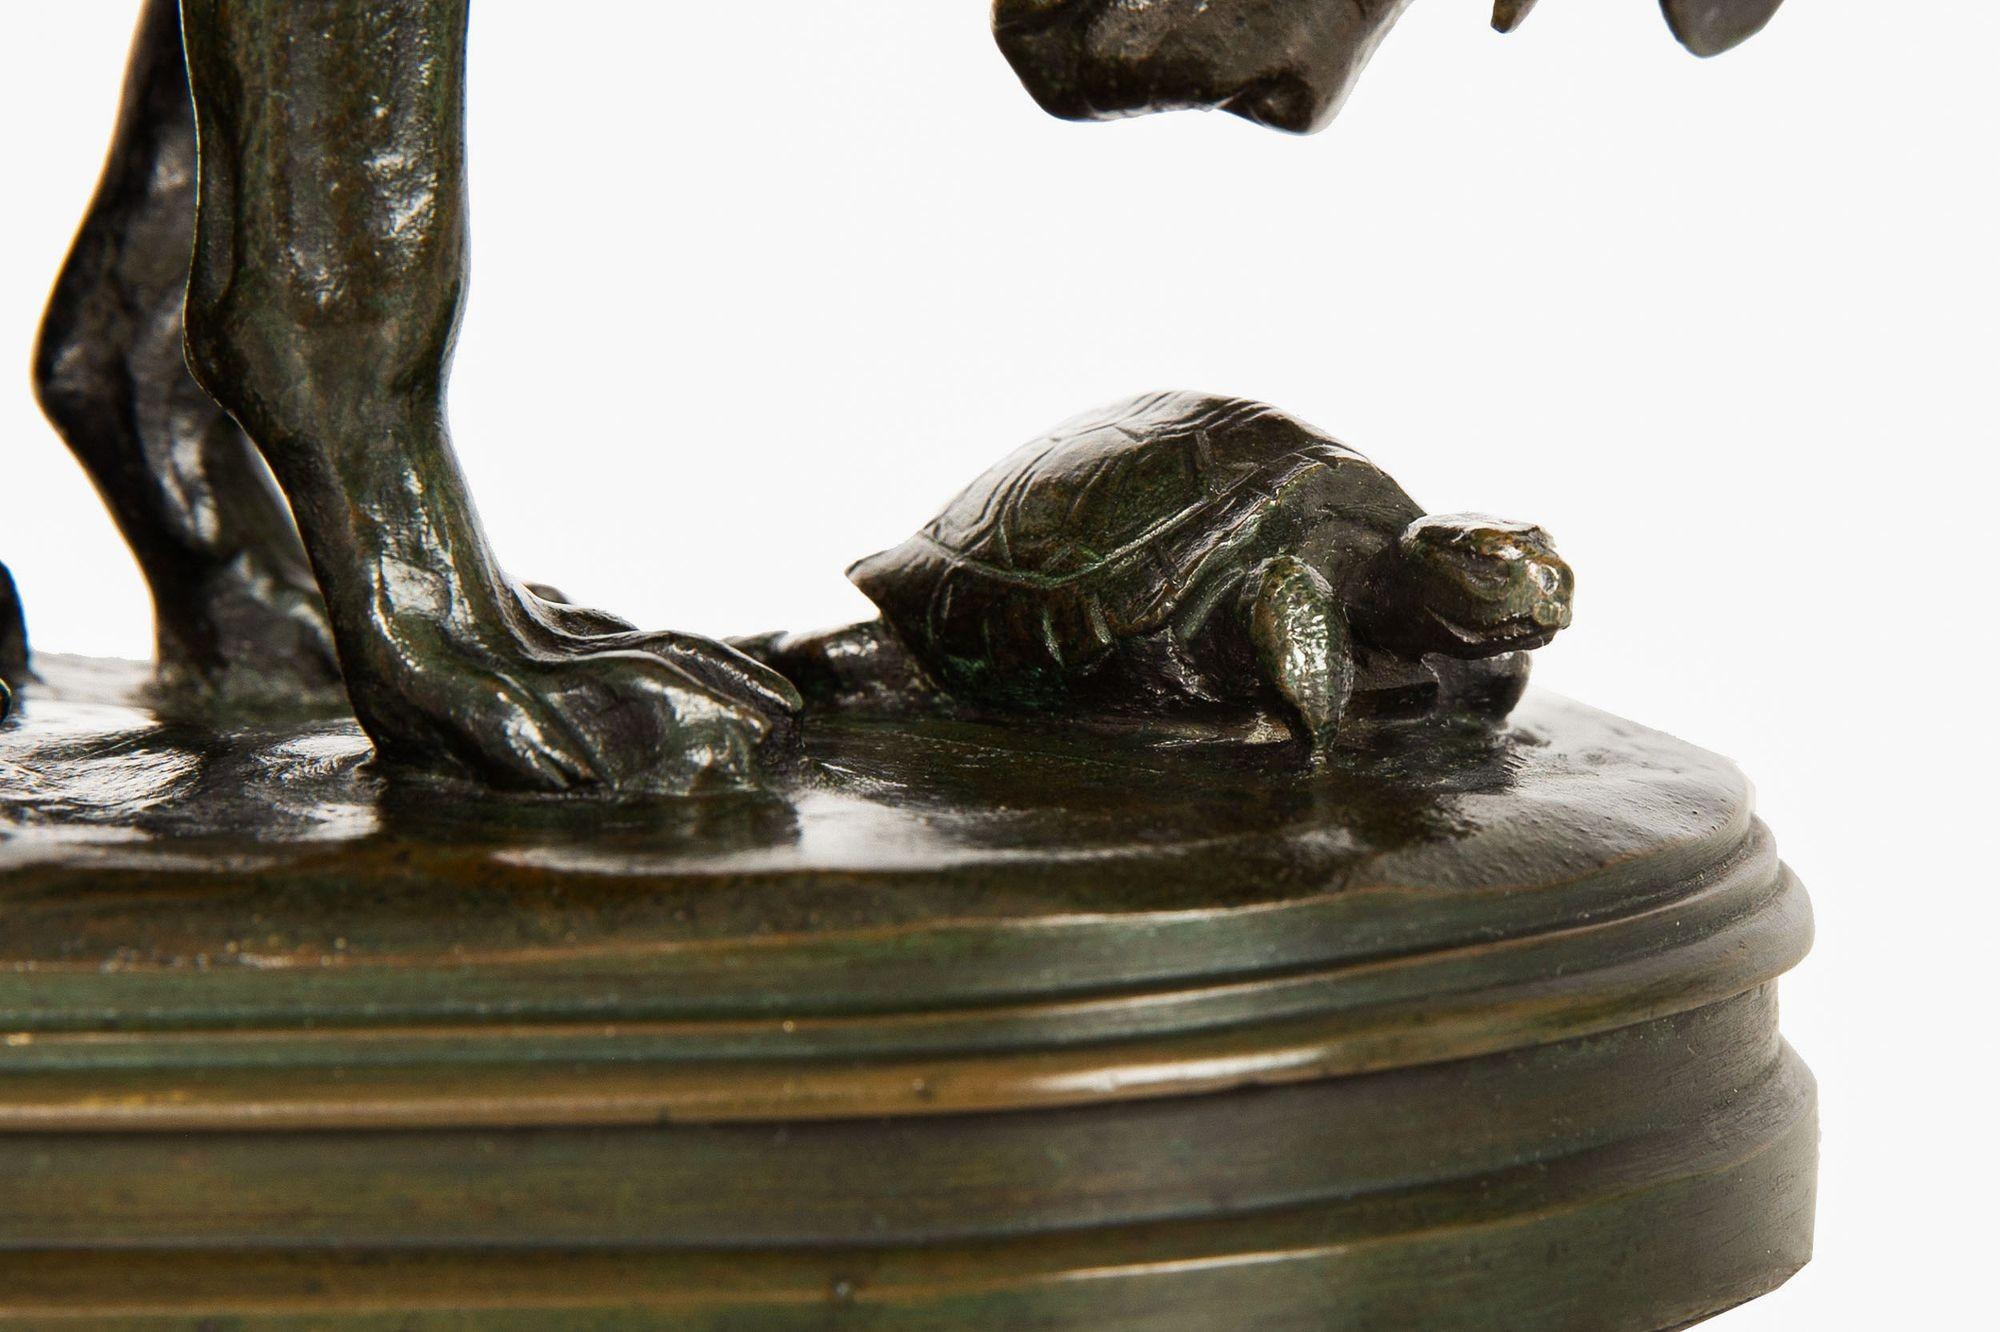 French Antique Bronze Sculpture “Hound & Tortoise” by Henri Jacquemart For Sale 10